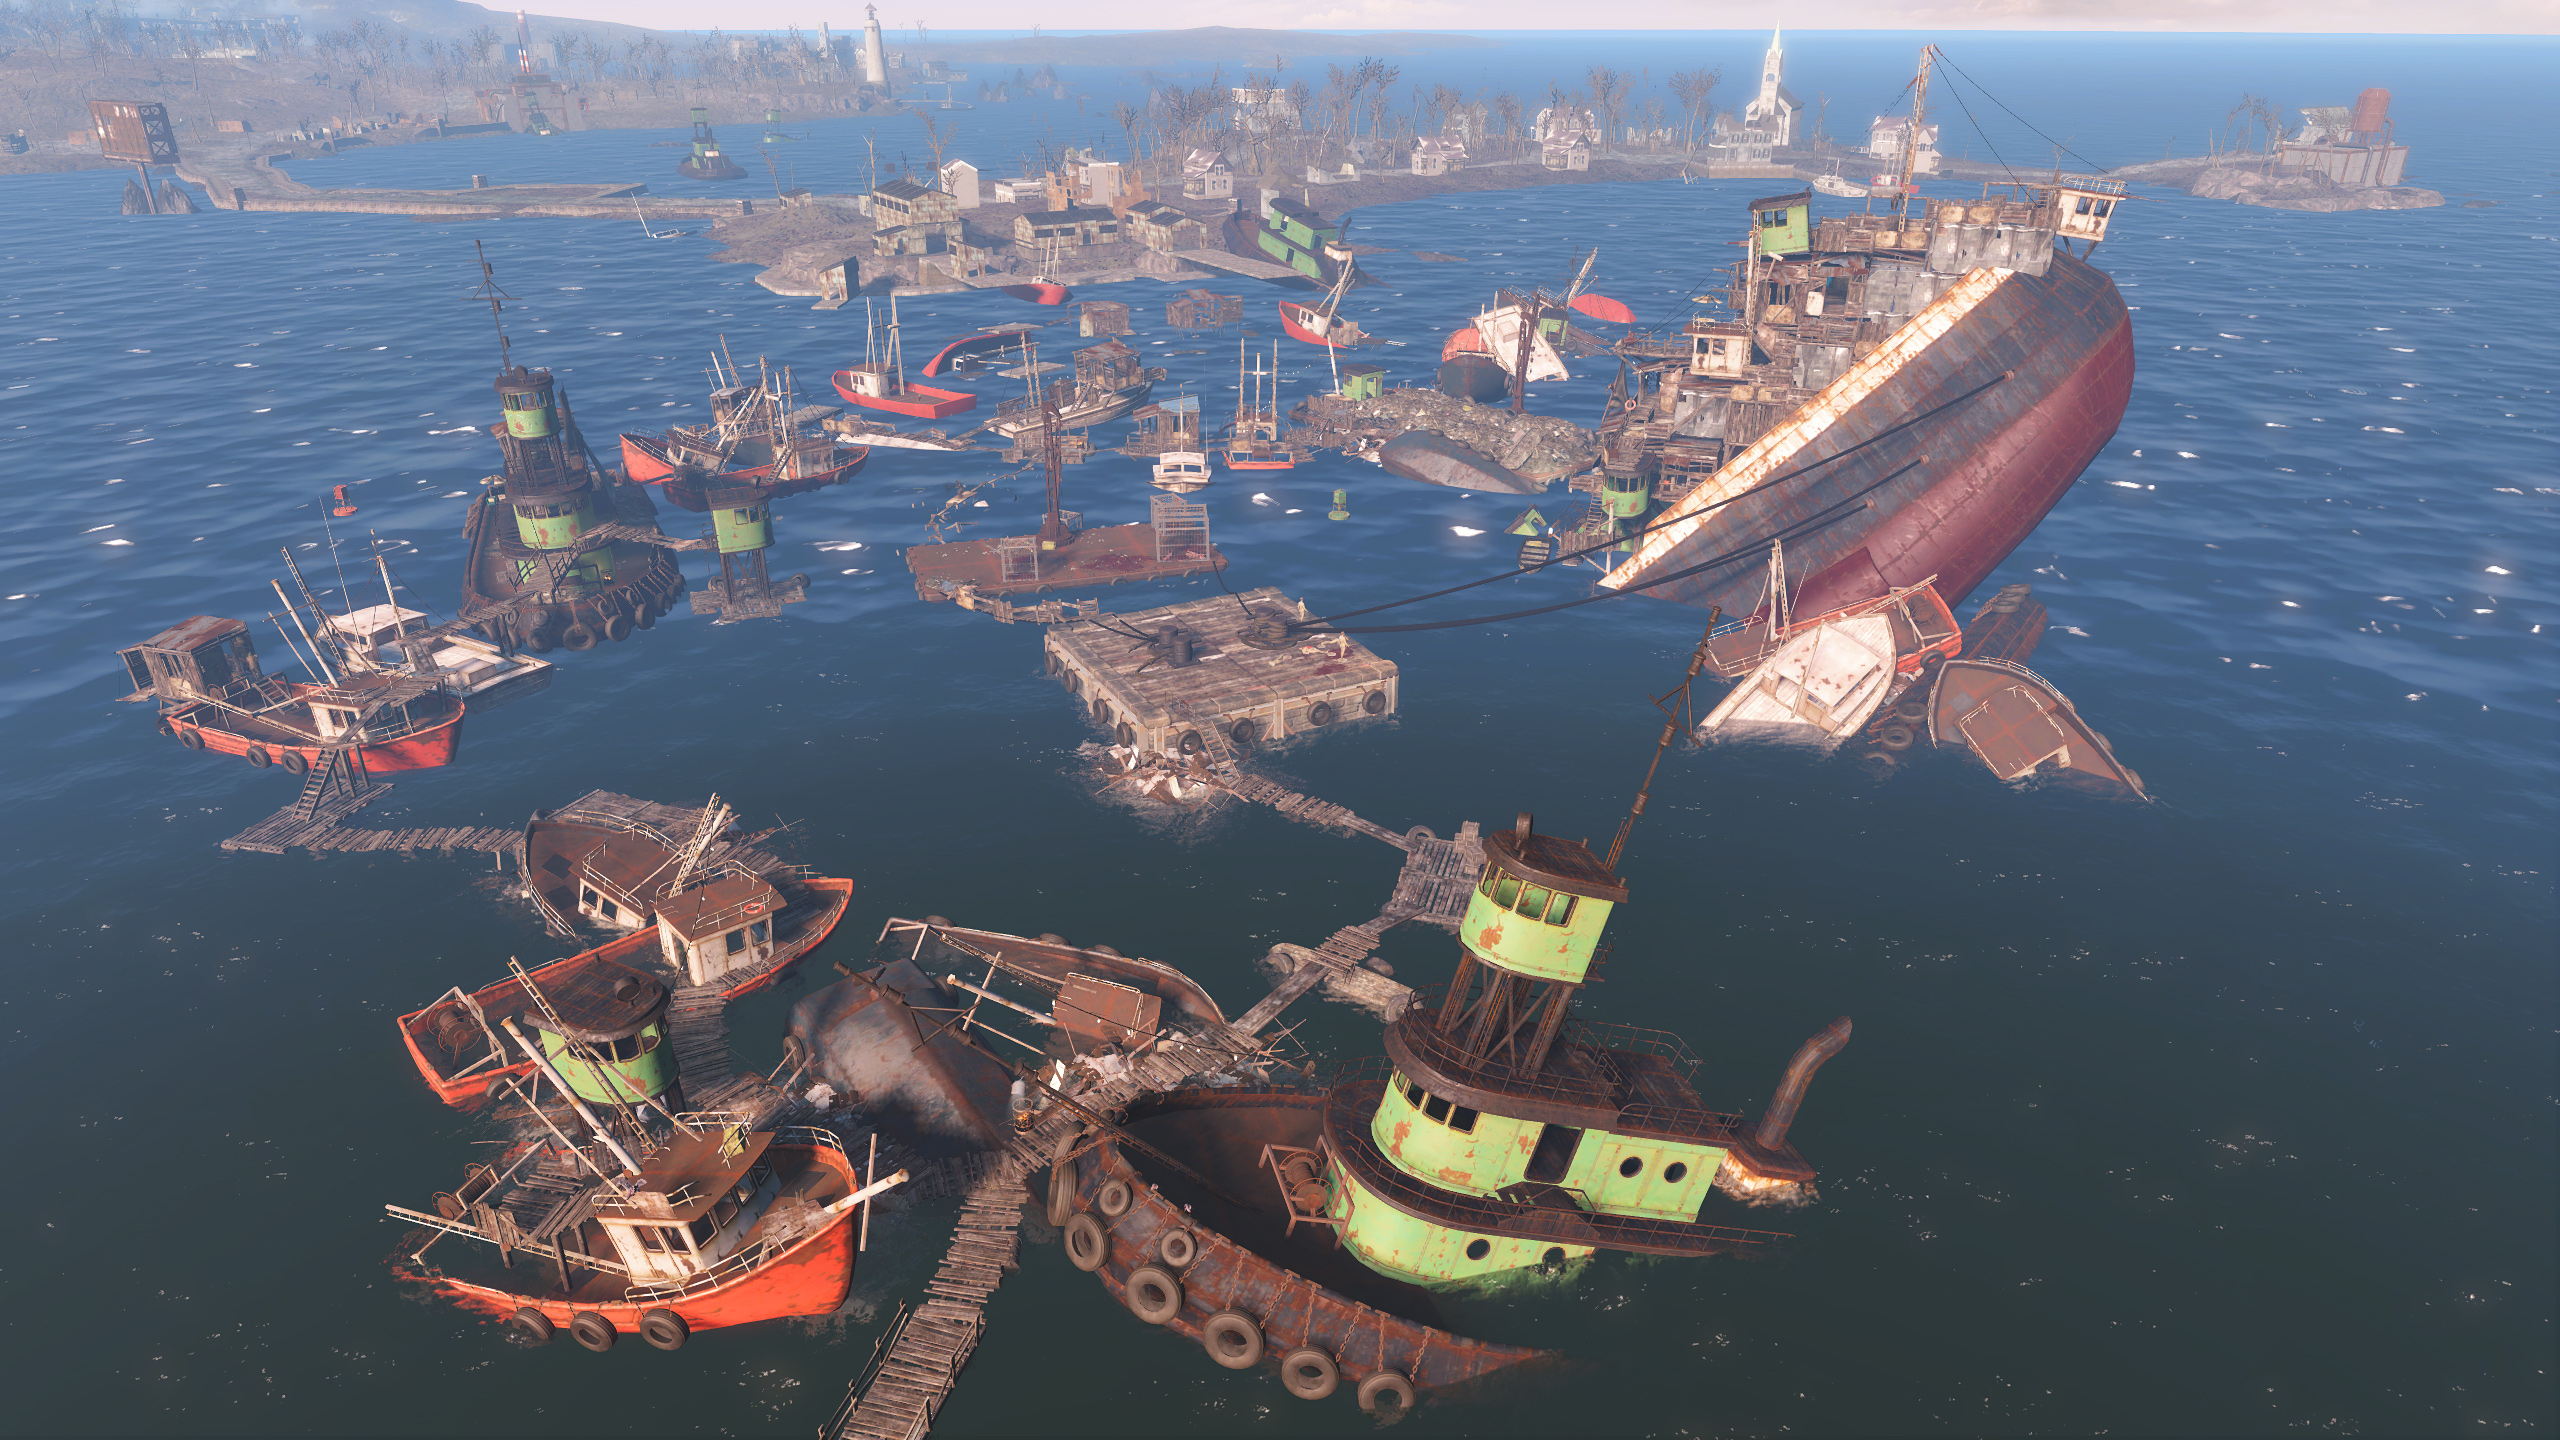 fallout 4 pirate ship location